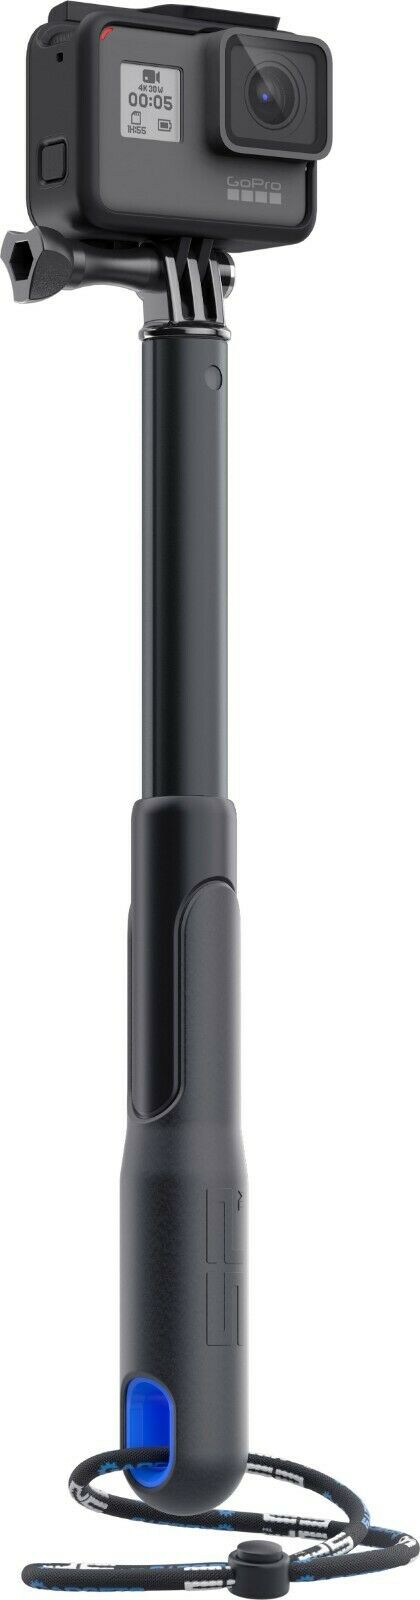 SP Gadgets POV GoPro Pole / Selfie Stick - 37" Inch / 94cm - Sportandleisure.com (7546357350657)